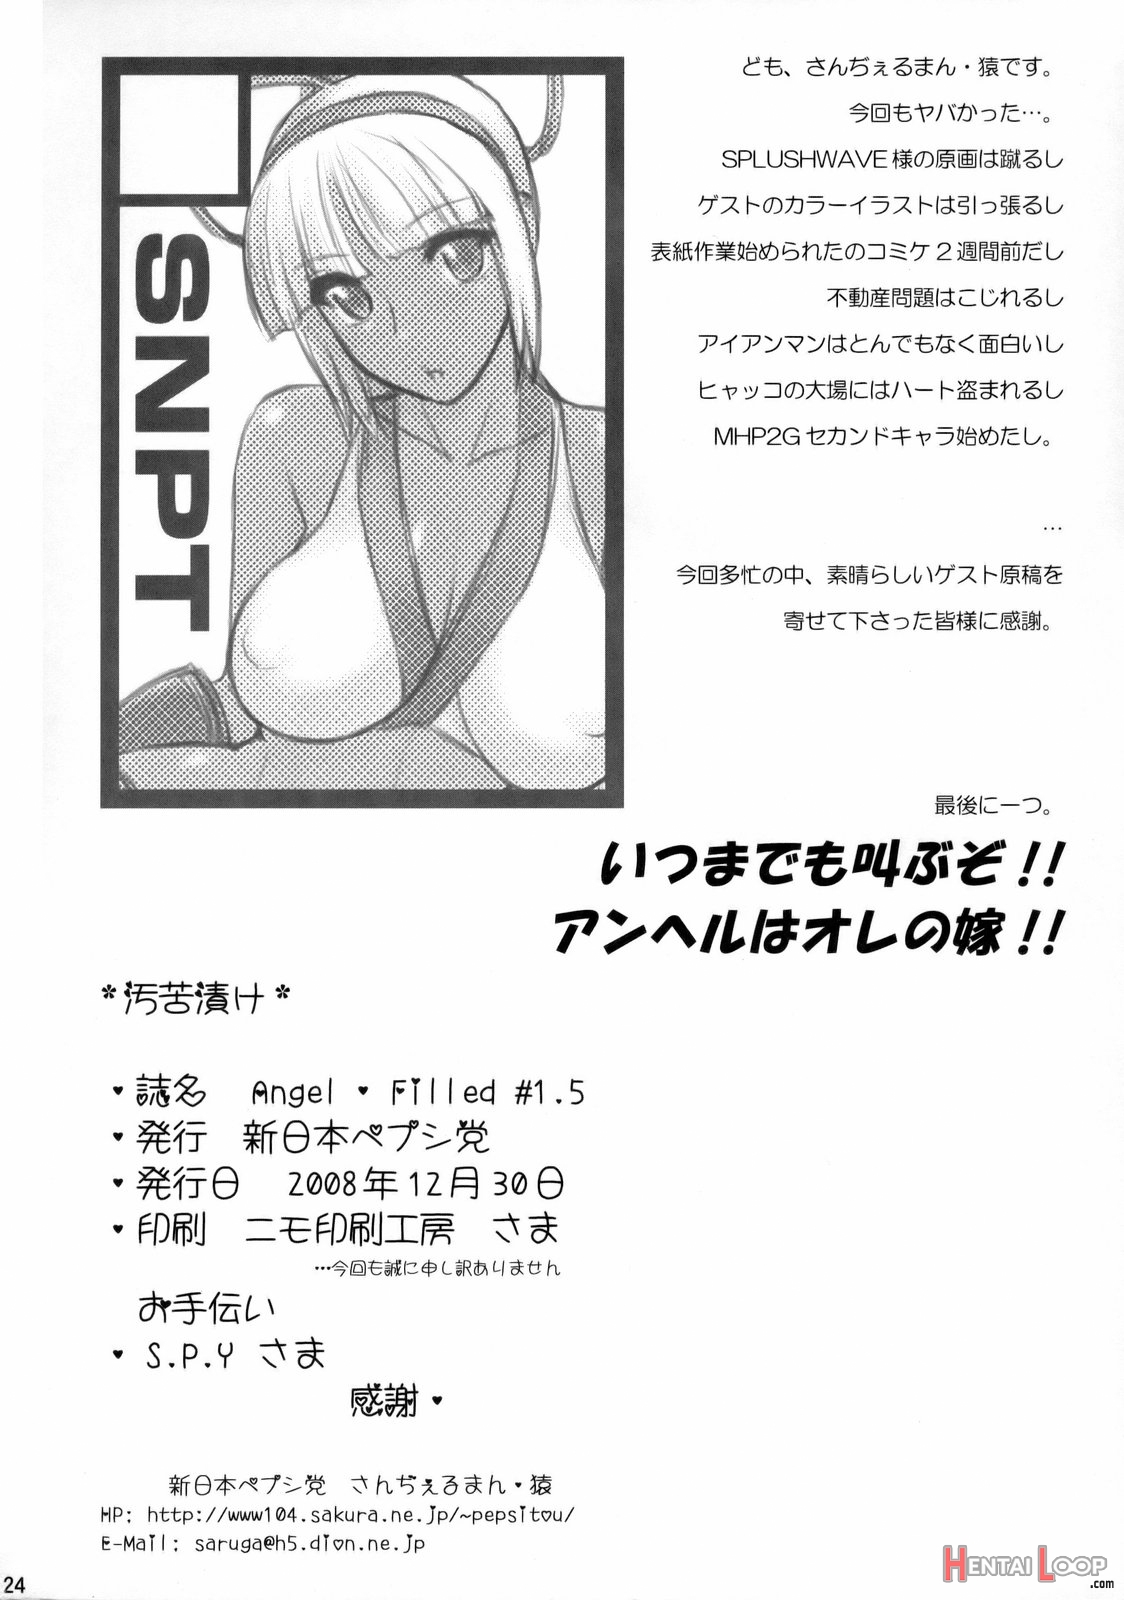 Angel Filled 1.5 - Shin Nihon Pepsitou page 25